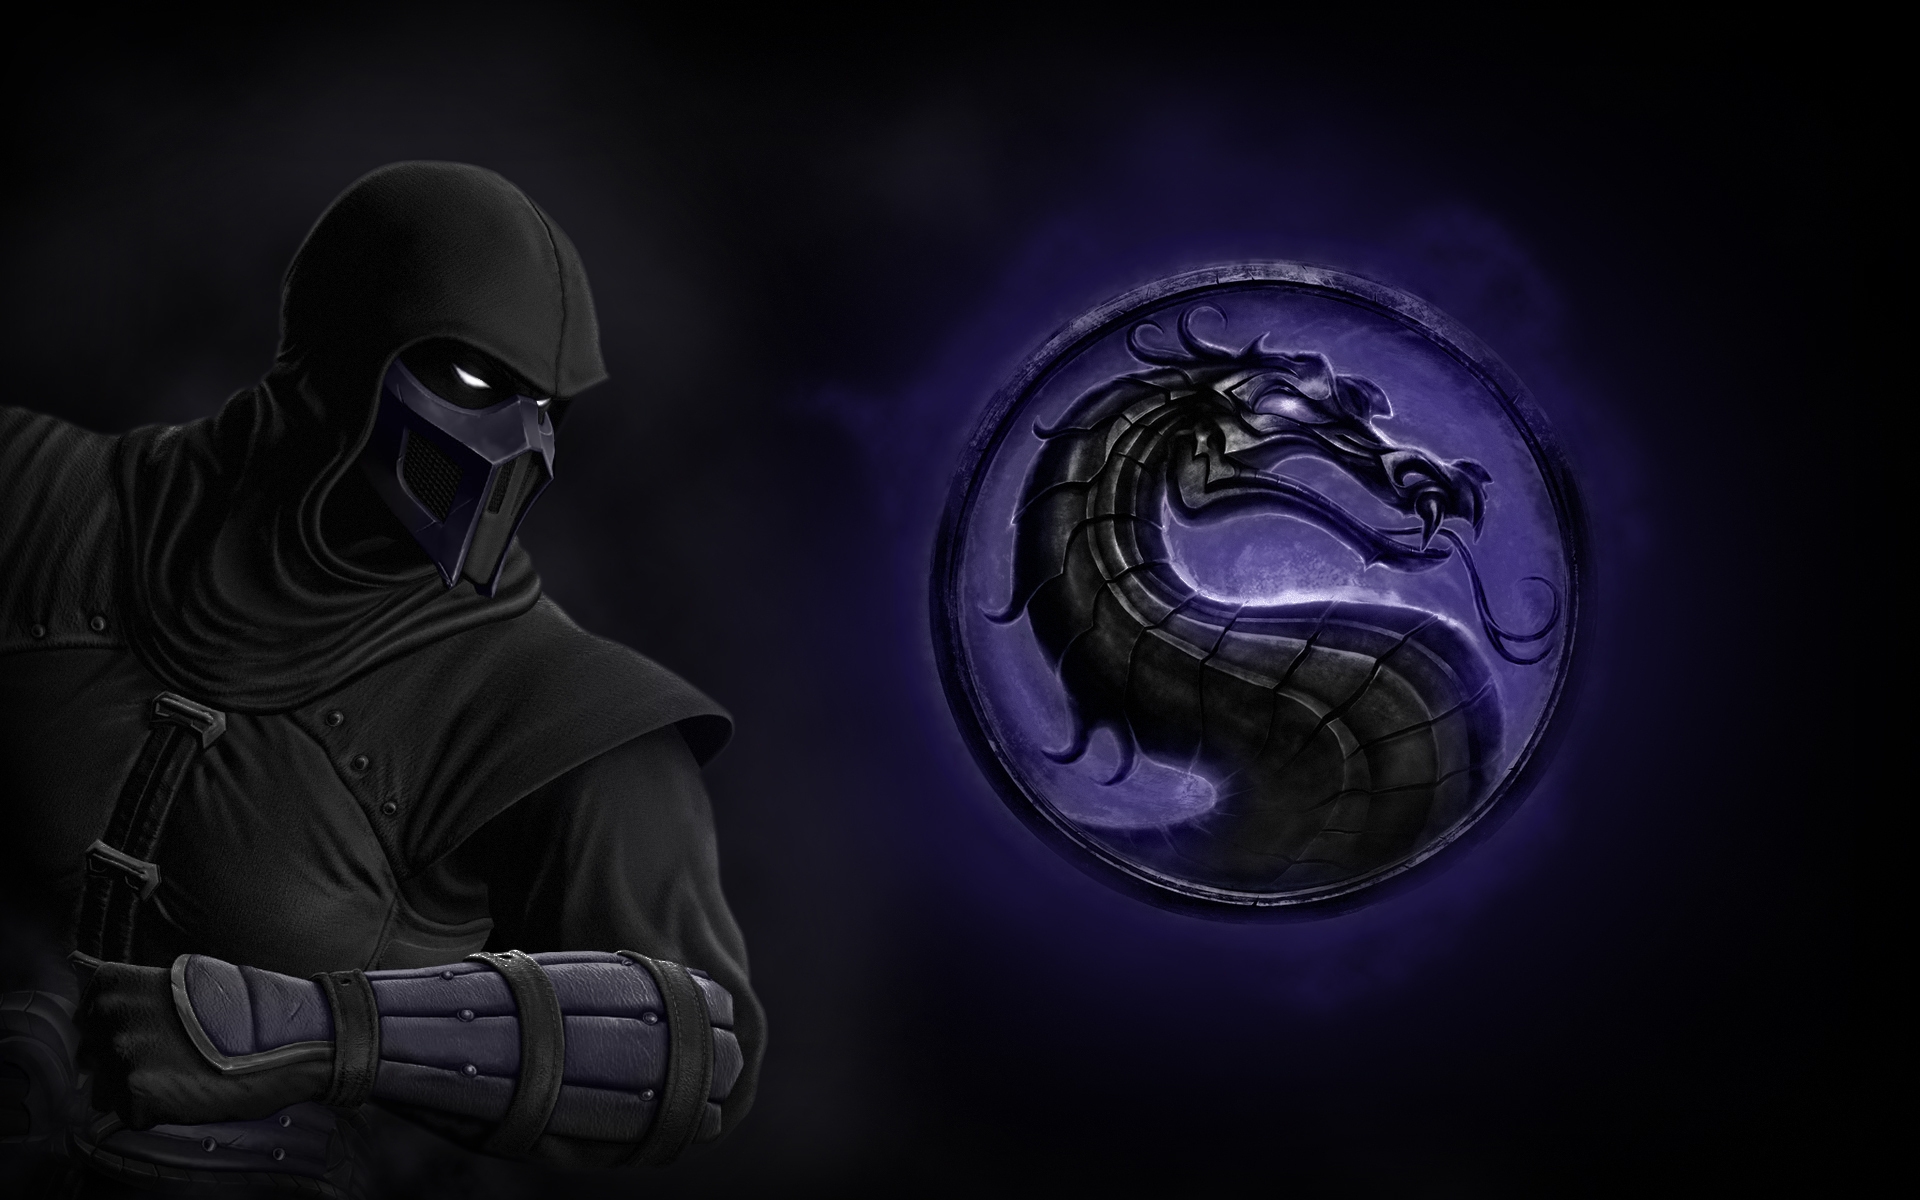 Mortal Kombat HD Wallpaper